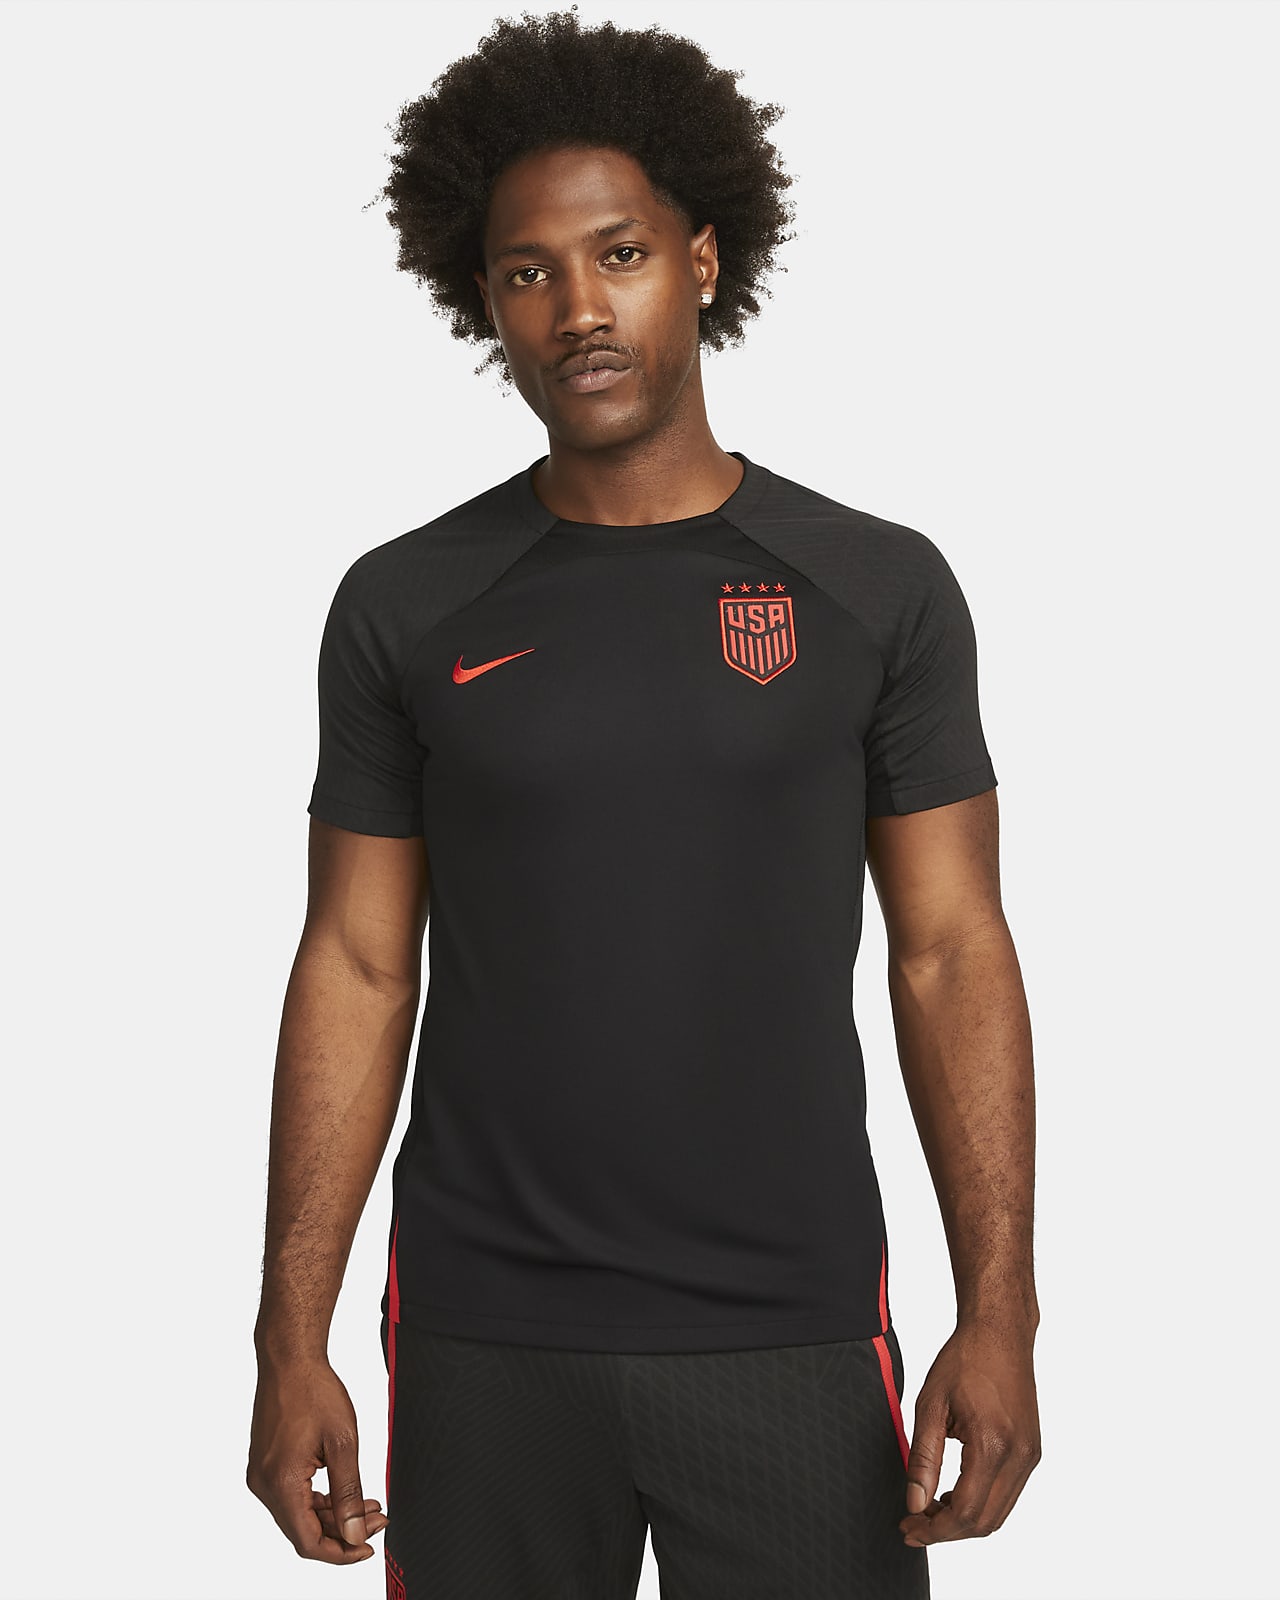 Diakritisch Elektricien Plaatsen U.S. Strike Men's Nike Dri-FIT Knit Soccer Top. Nike.com